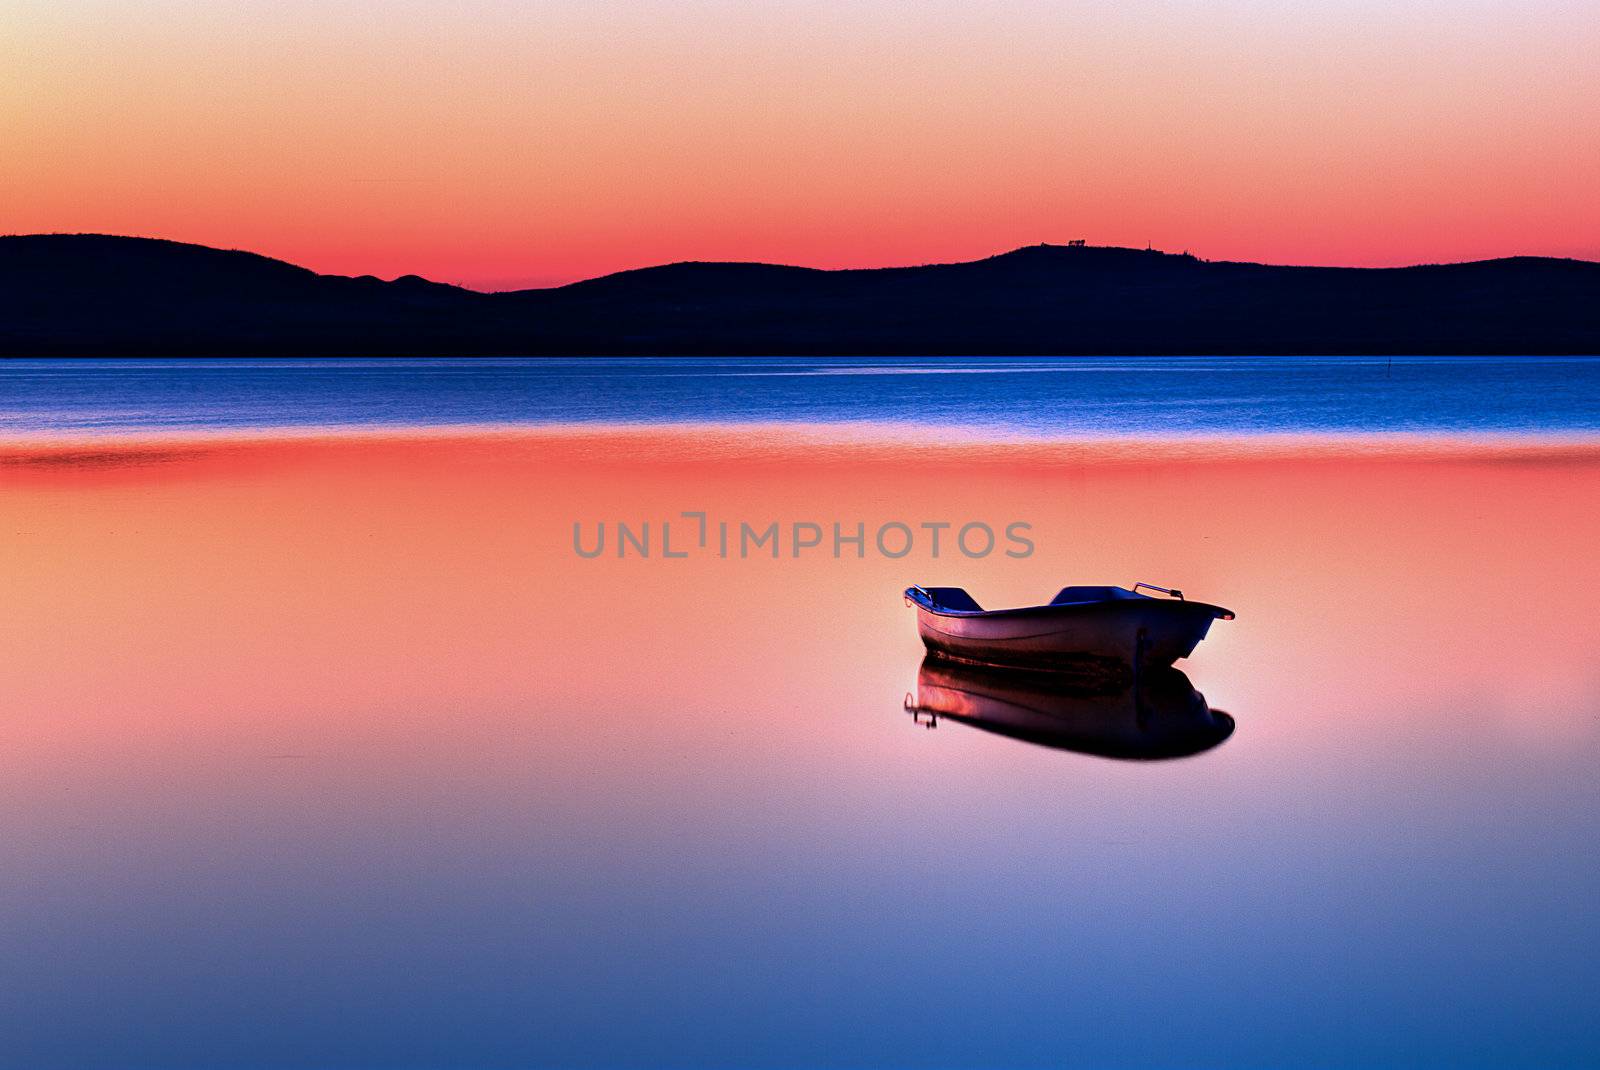 Boat in sunset by lavsen